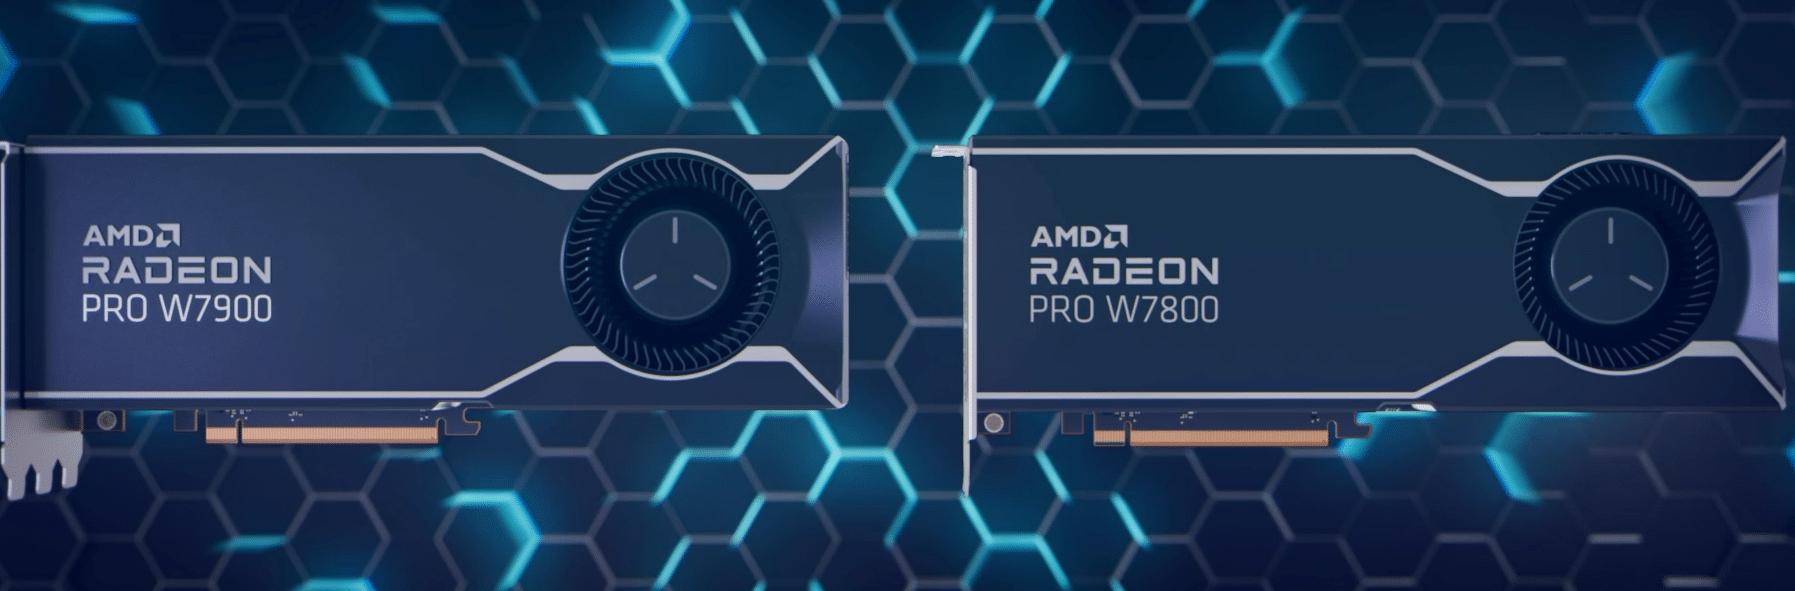 AMD Radeon PRO - AMD Radeon PRO W7000 Series - ภาพที่ 1